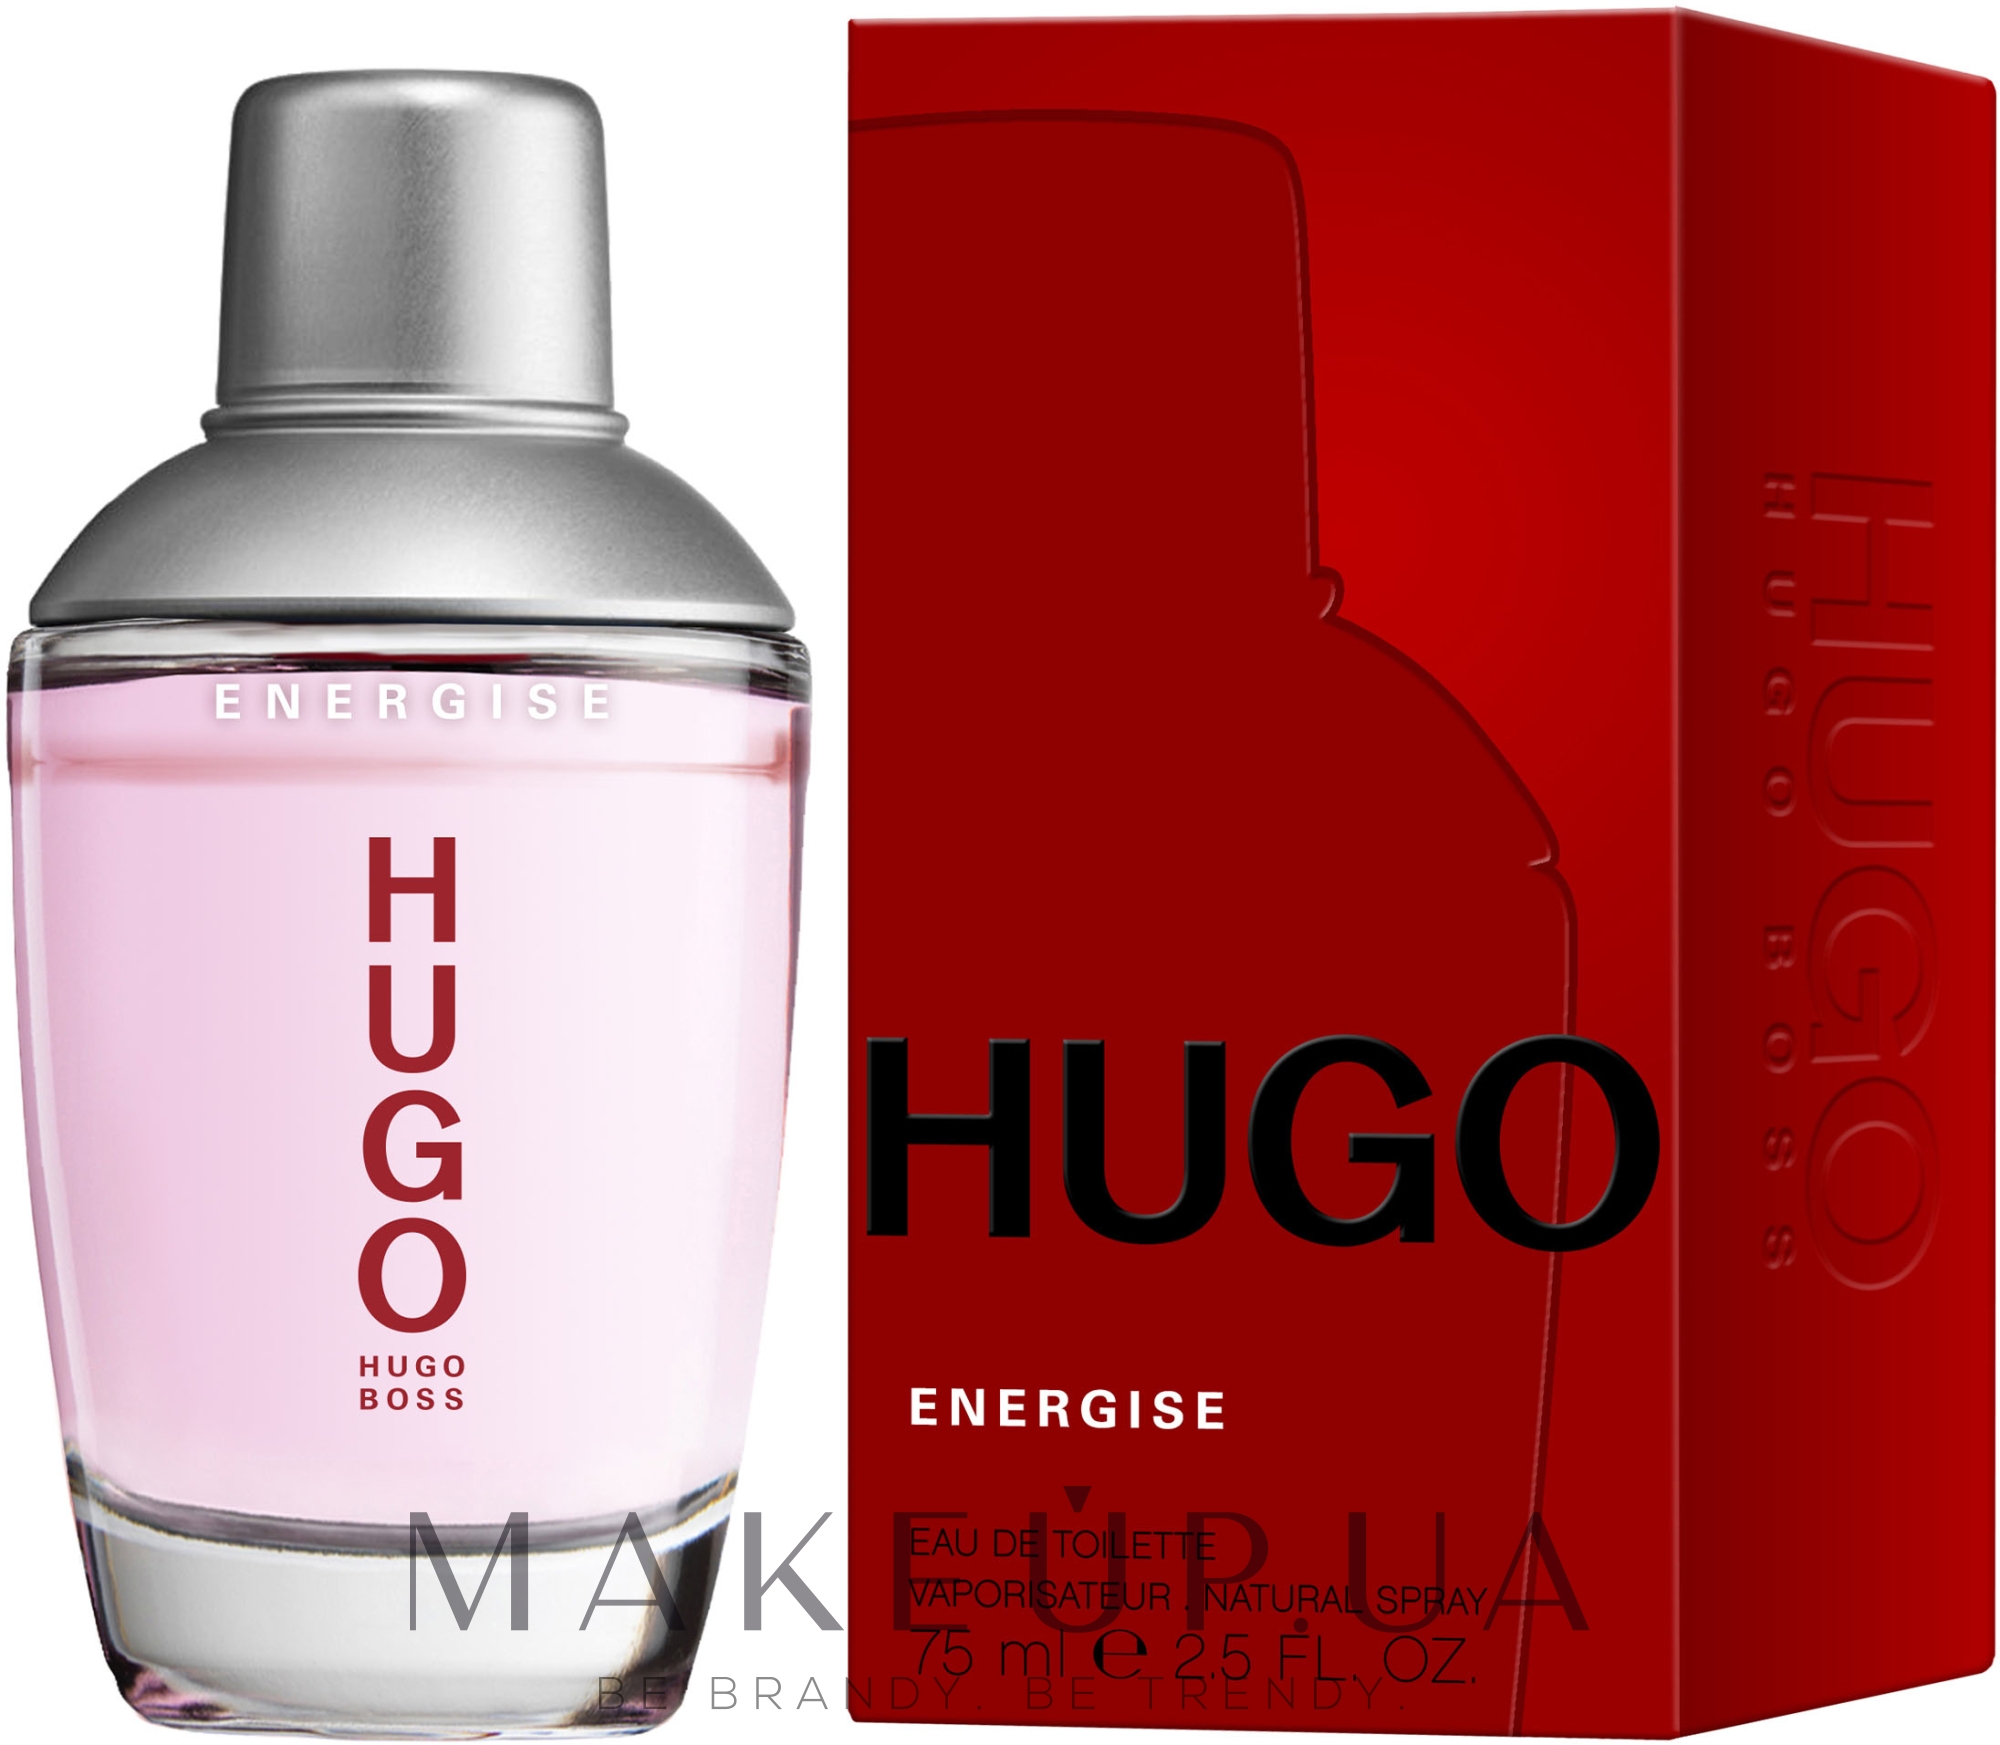 Hugo купить спб. Hugo Boss Energise 75ml. Hugo Boss Energise men 75ml EDT. Boss Hugo Energise men 75ml. Духи Hugo Boss Energise мужские.